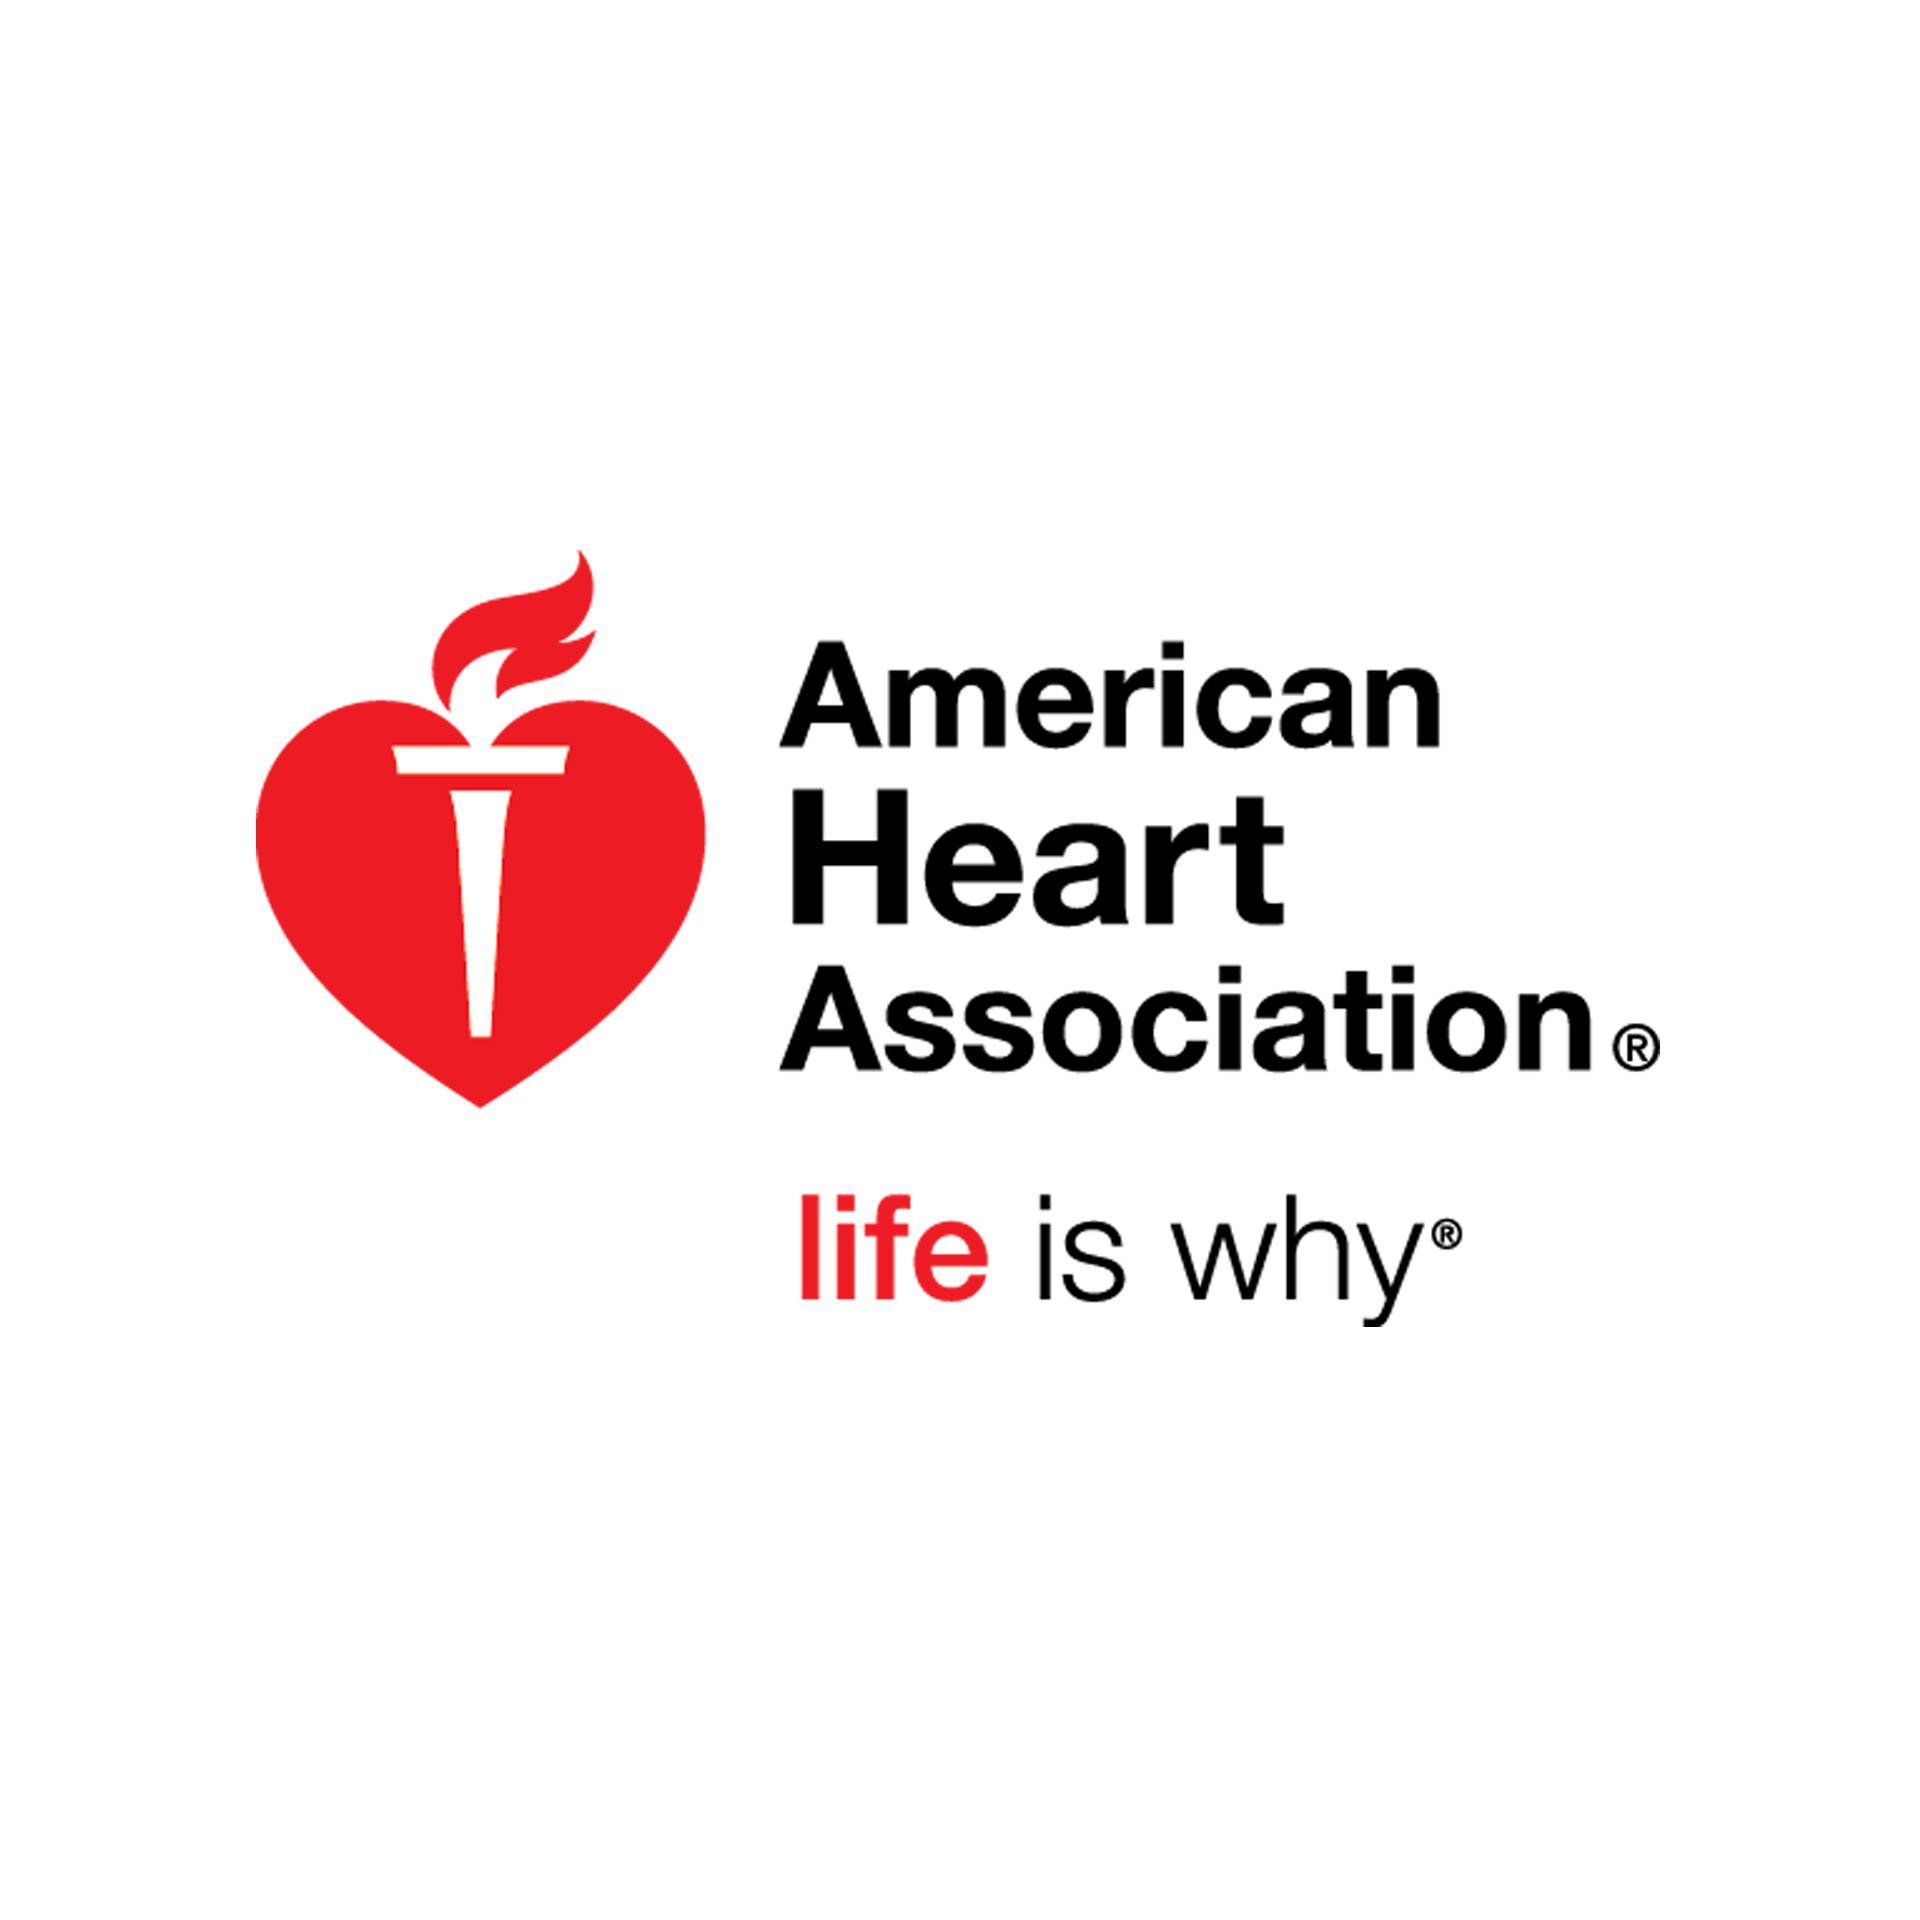 American heart. Американская кардиологическая Ассоциация. Эмблема европейской ассоциации кардиологов. Сердце ассоциации. Американская Ассоциация кардиологов выставка.